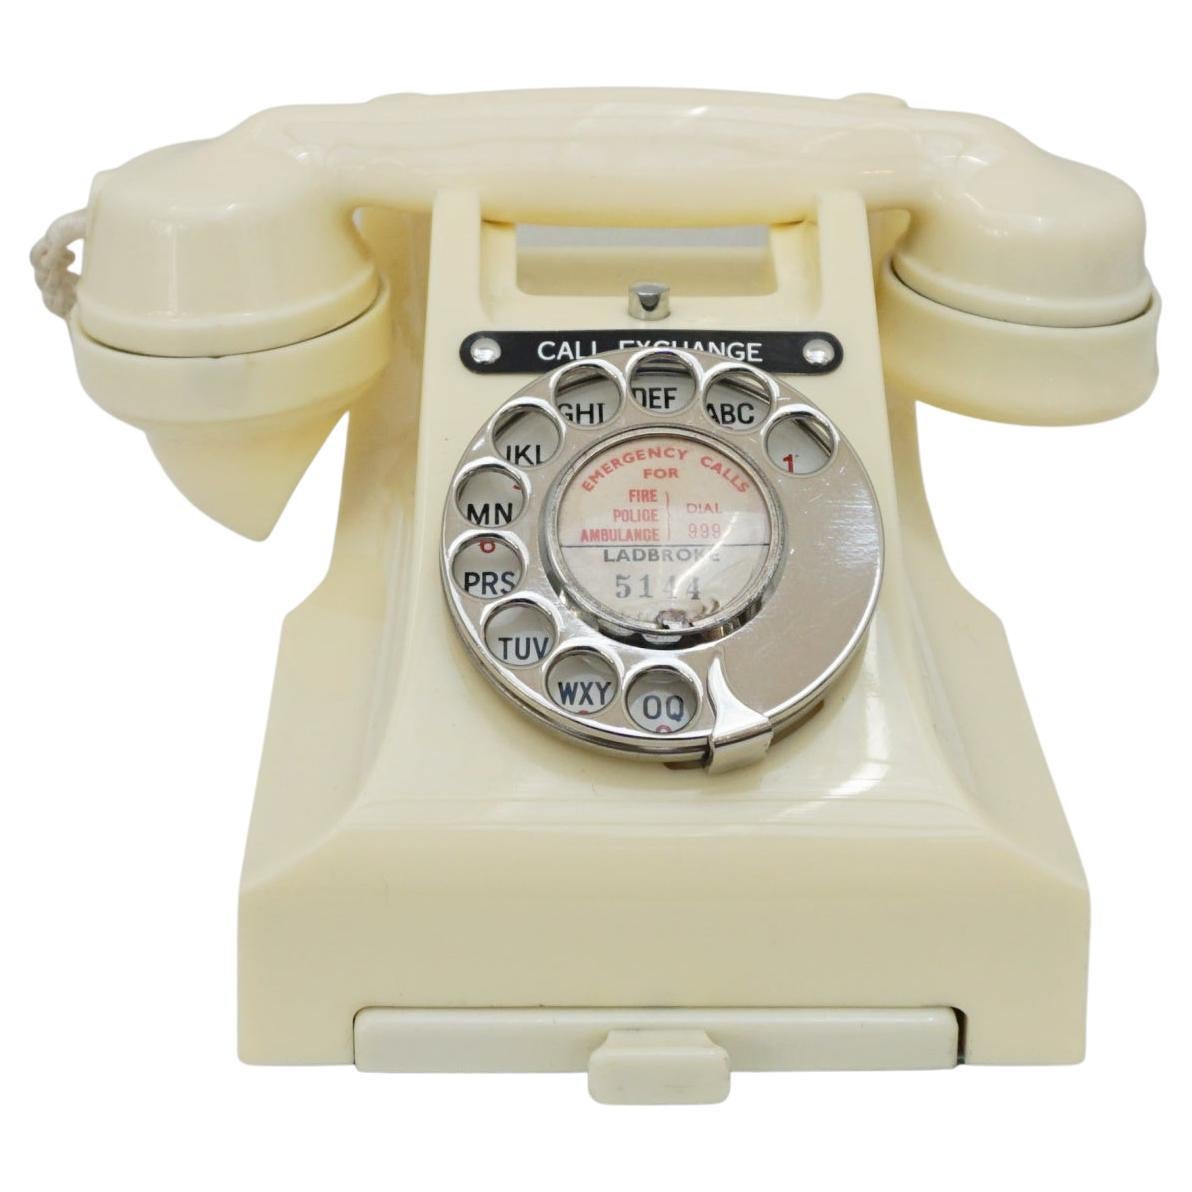 Original GPO Model 332L White Bakelite Telephone